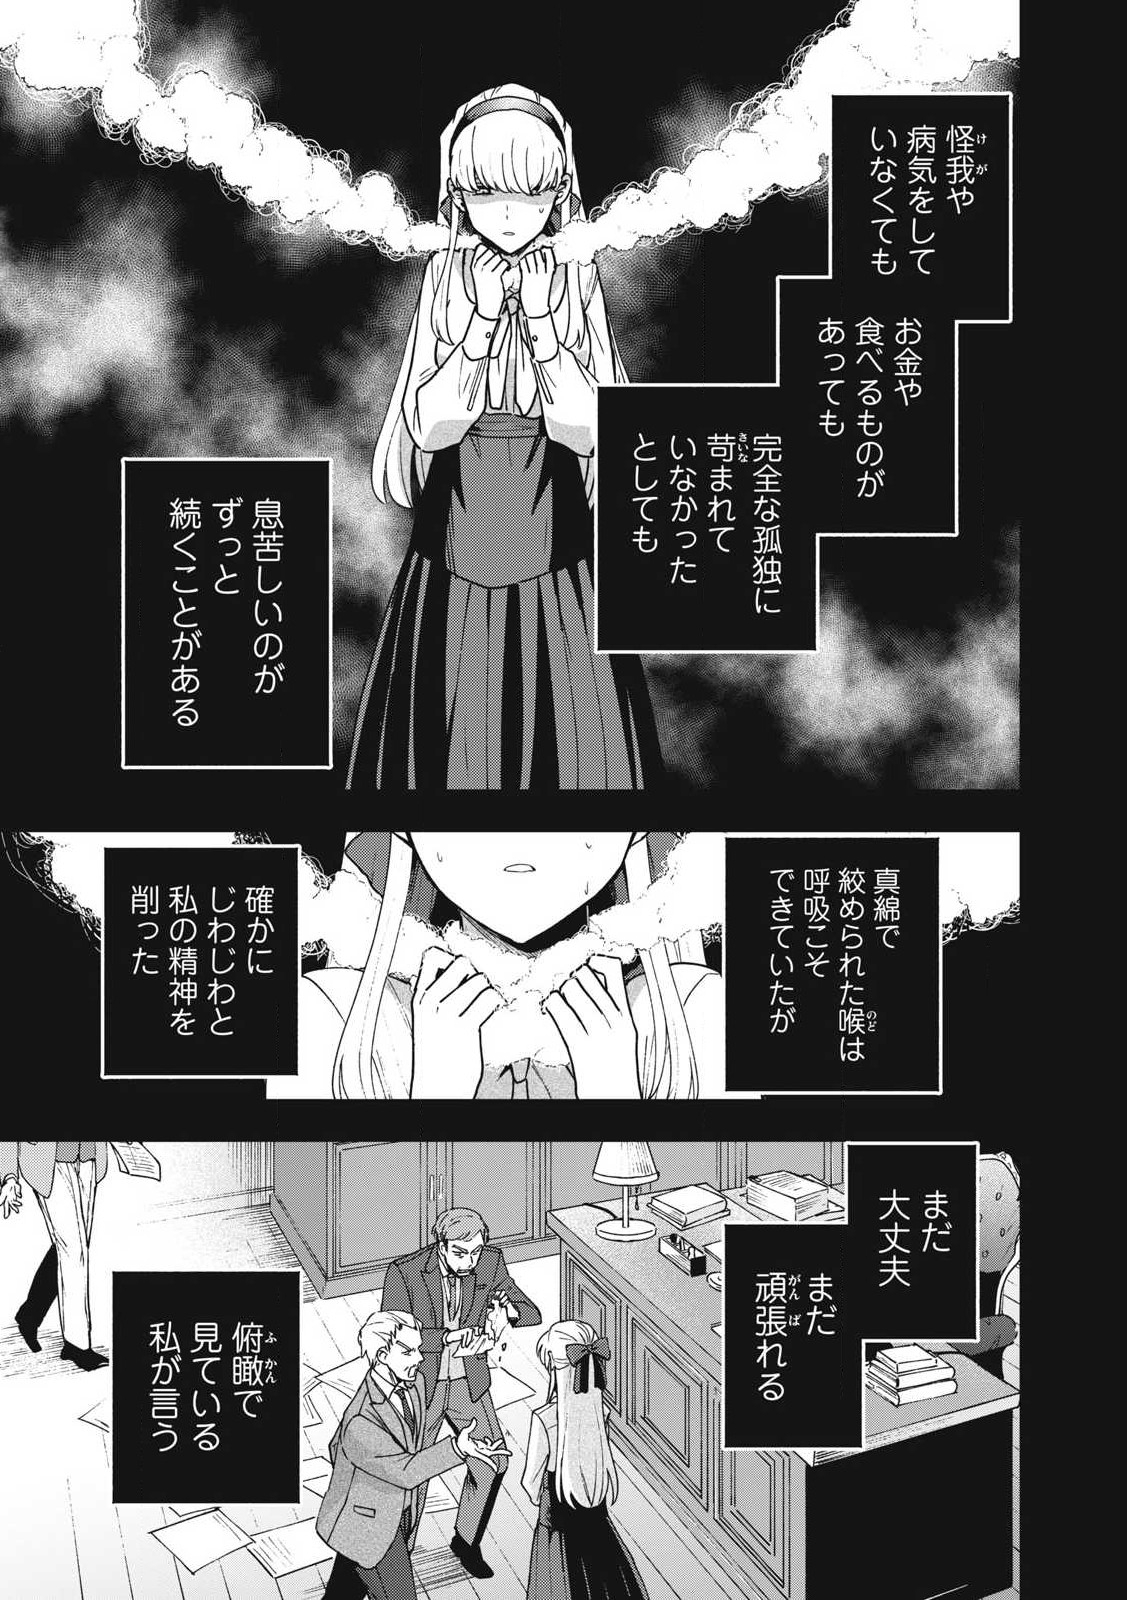 Yuki to Sumi - Chapter 24.1 - Page 1